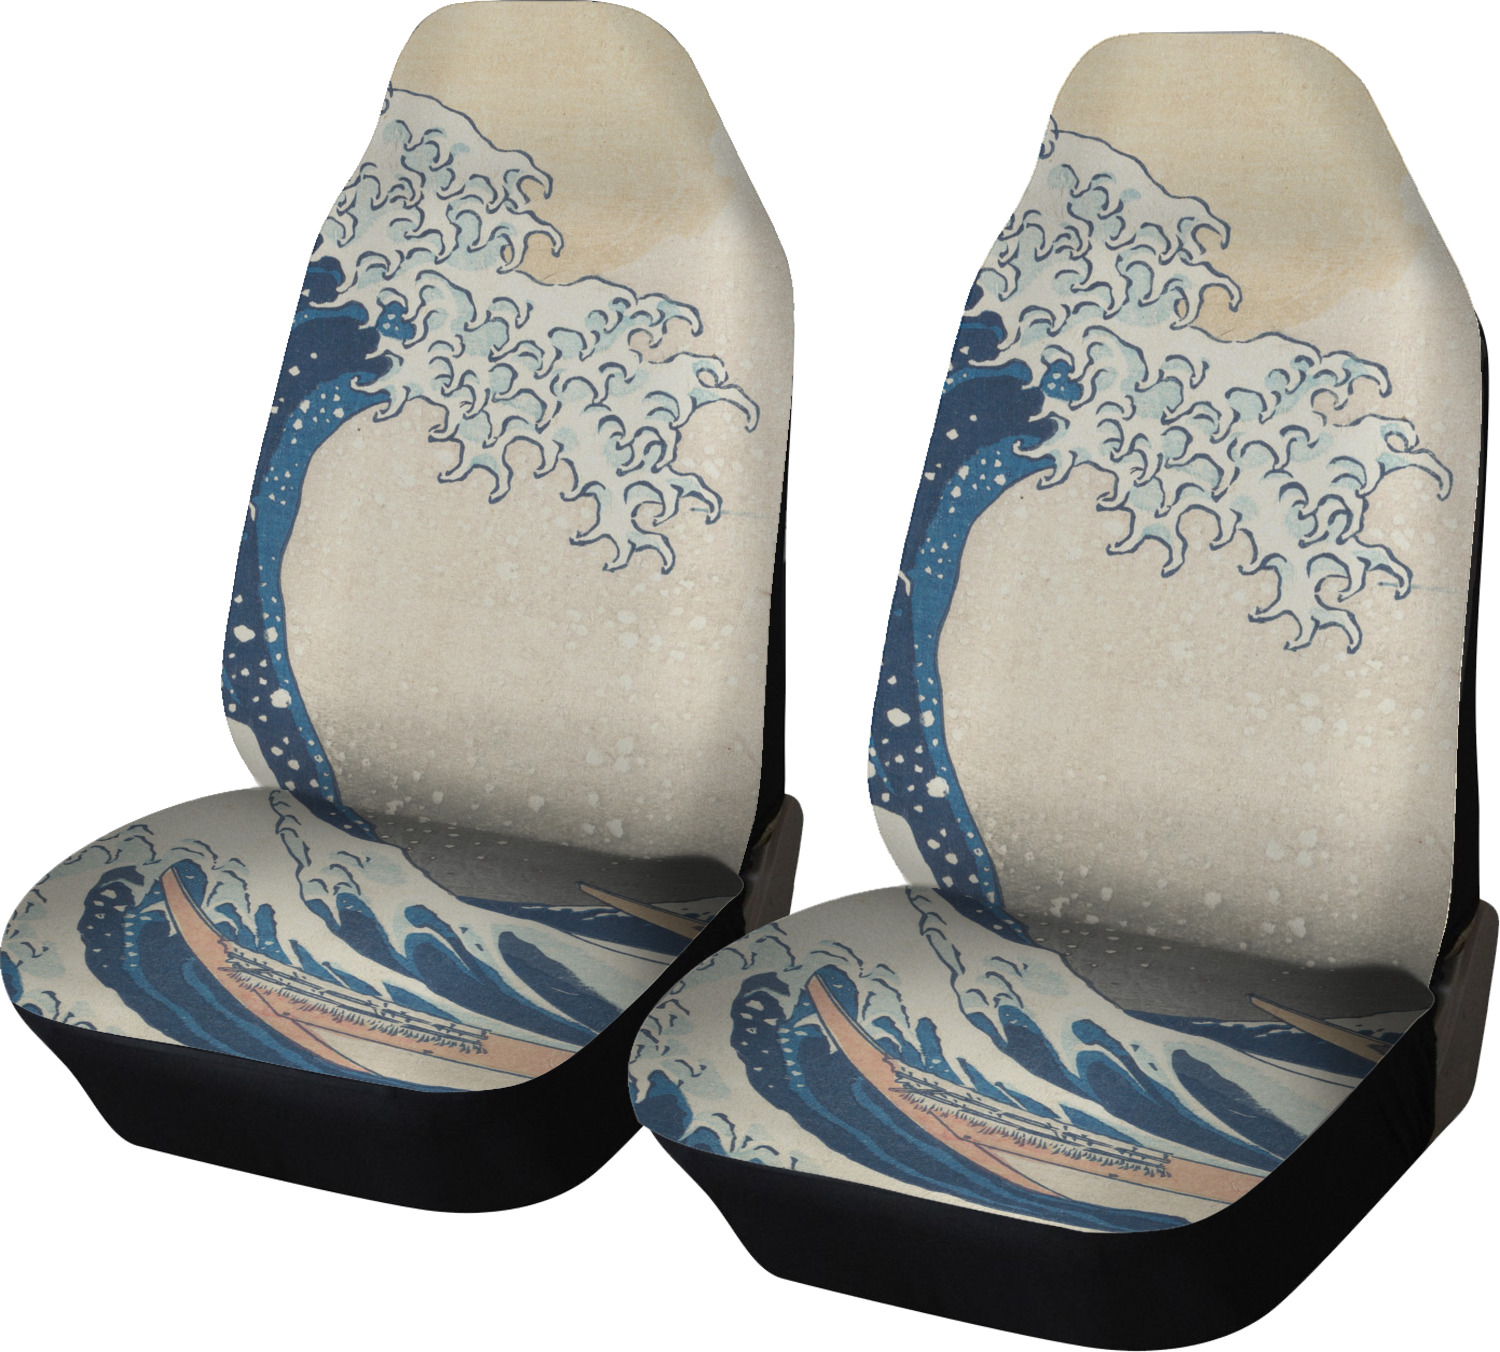 Custom Great Wave off Kanagawa Car Seat Covers (Set of Two)